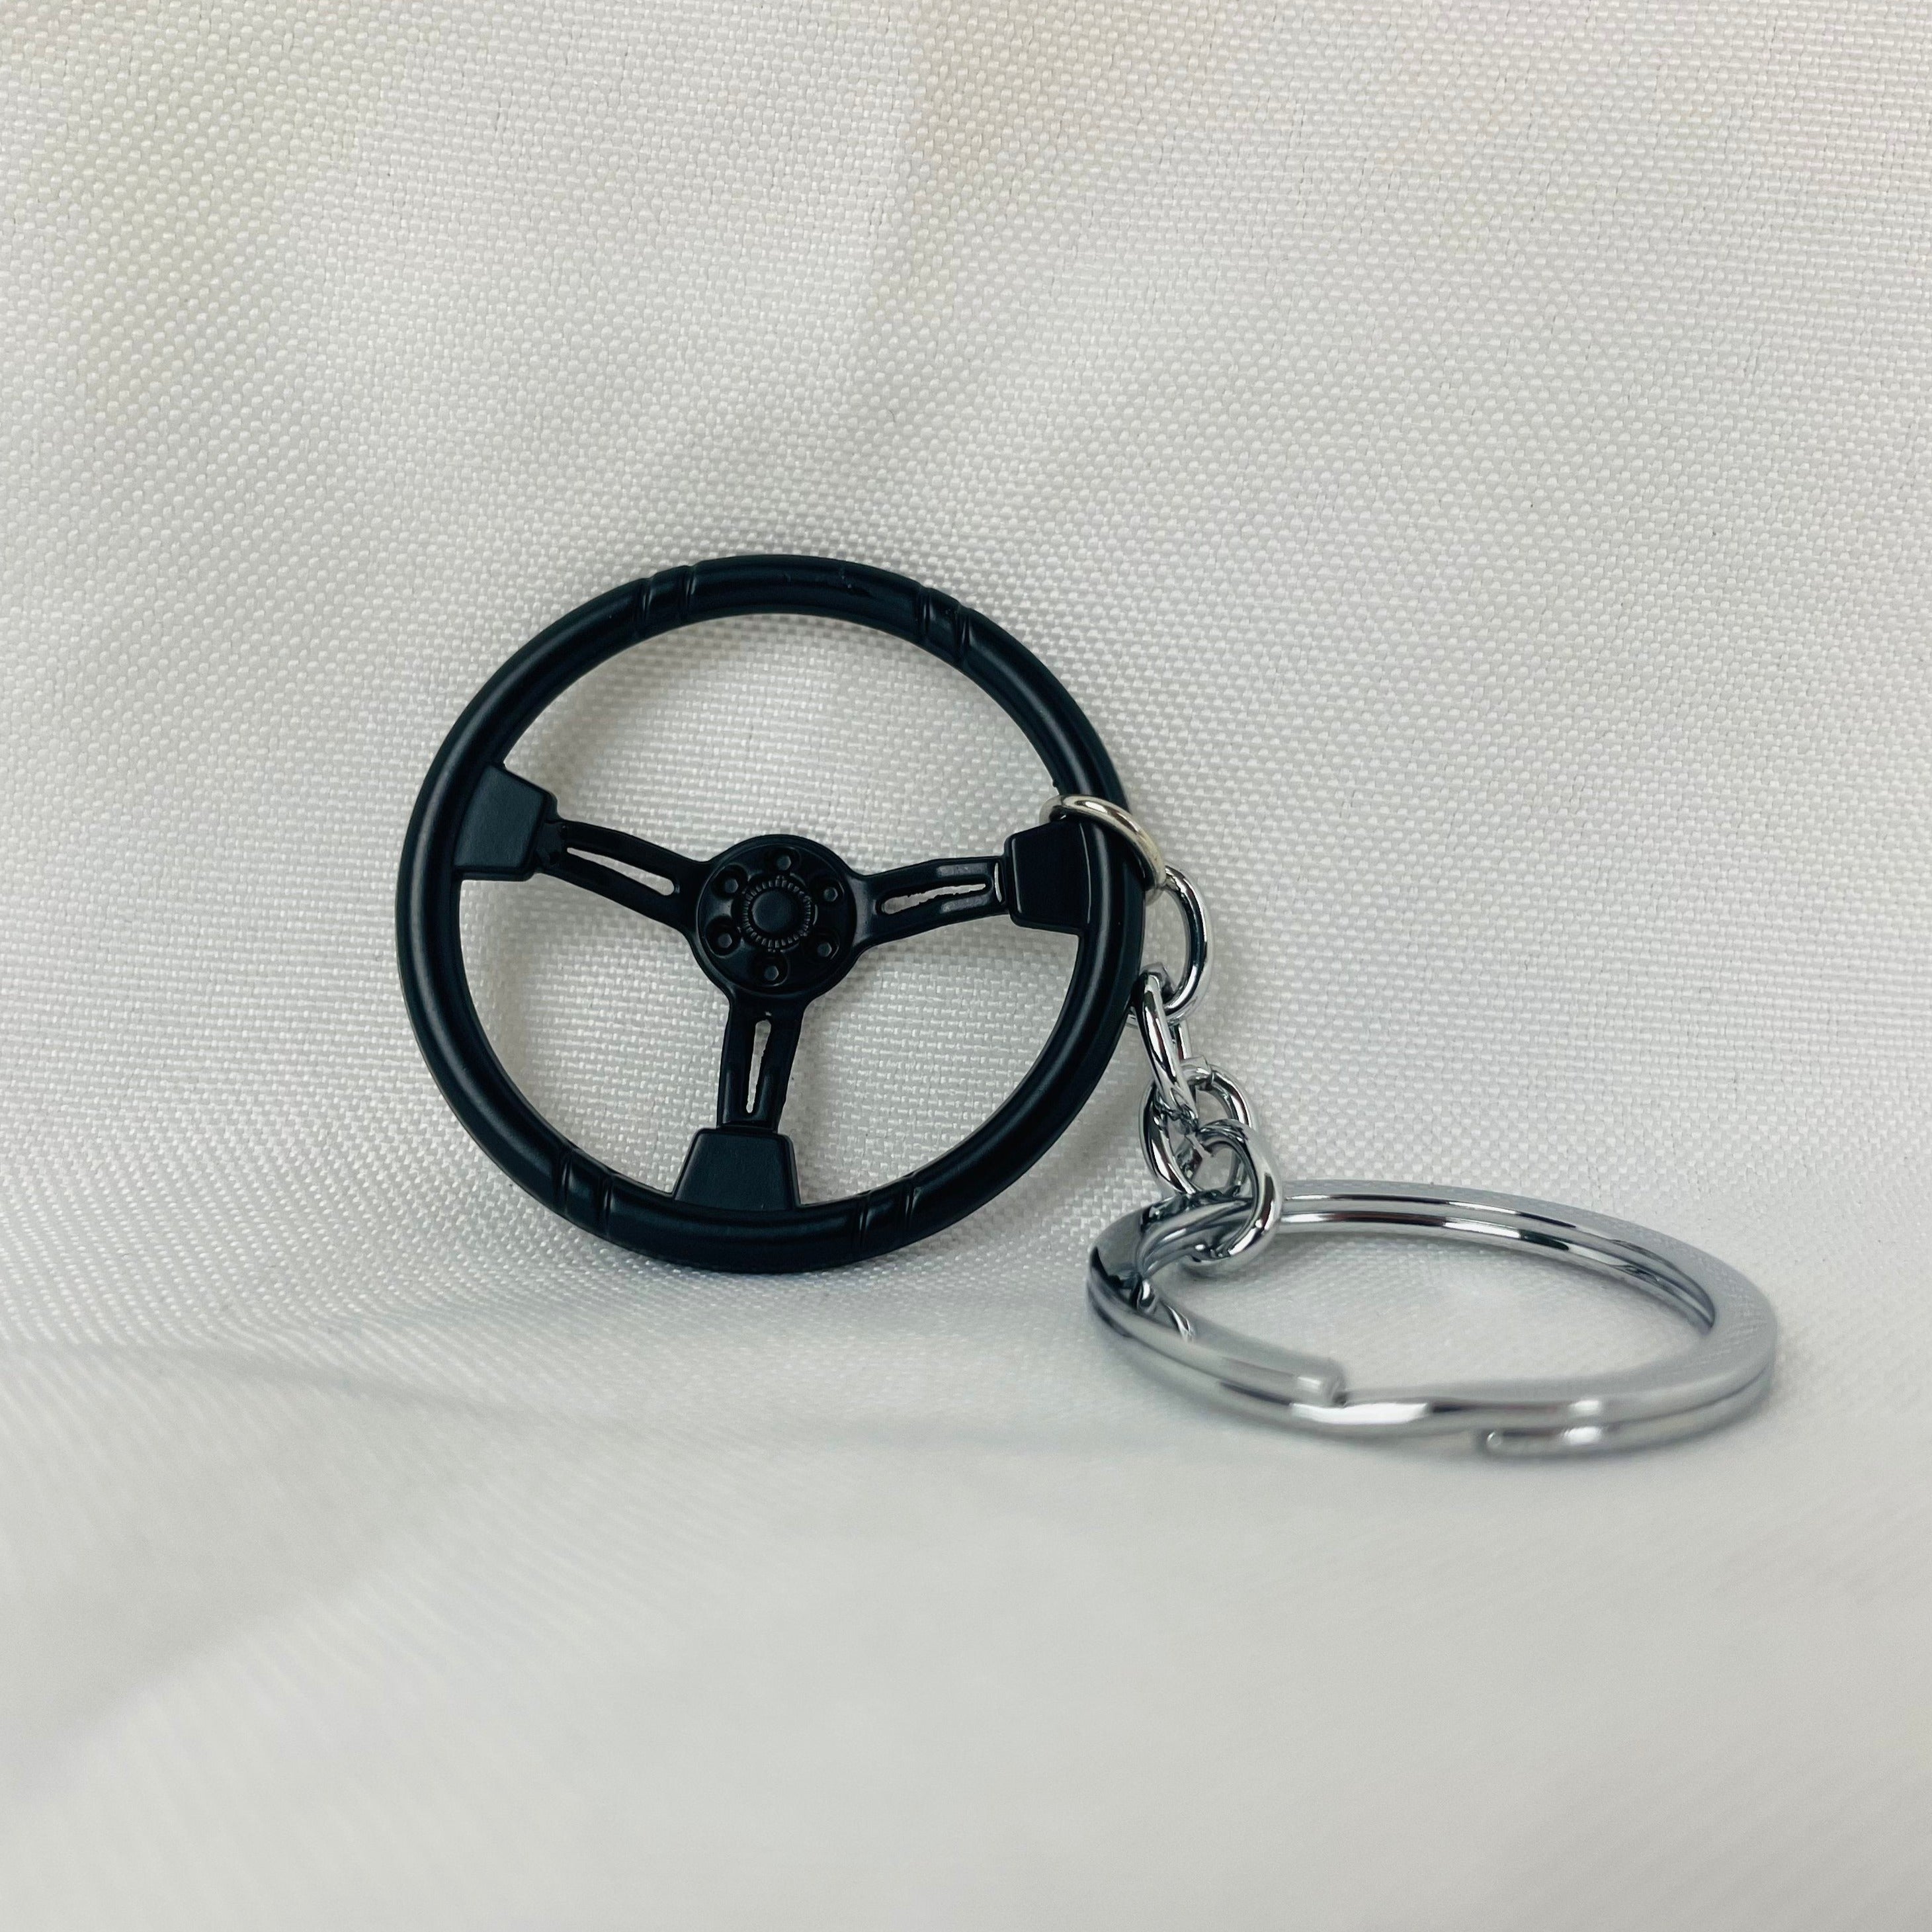 Steering wheel keychain